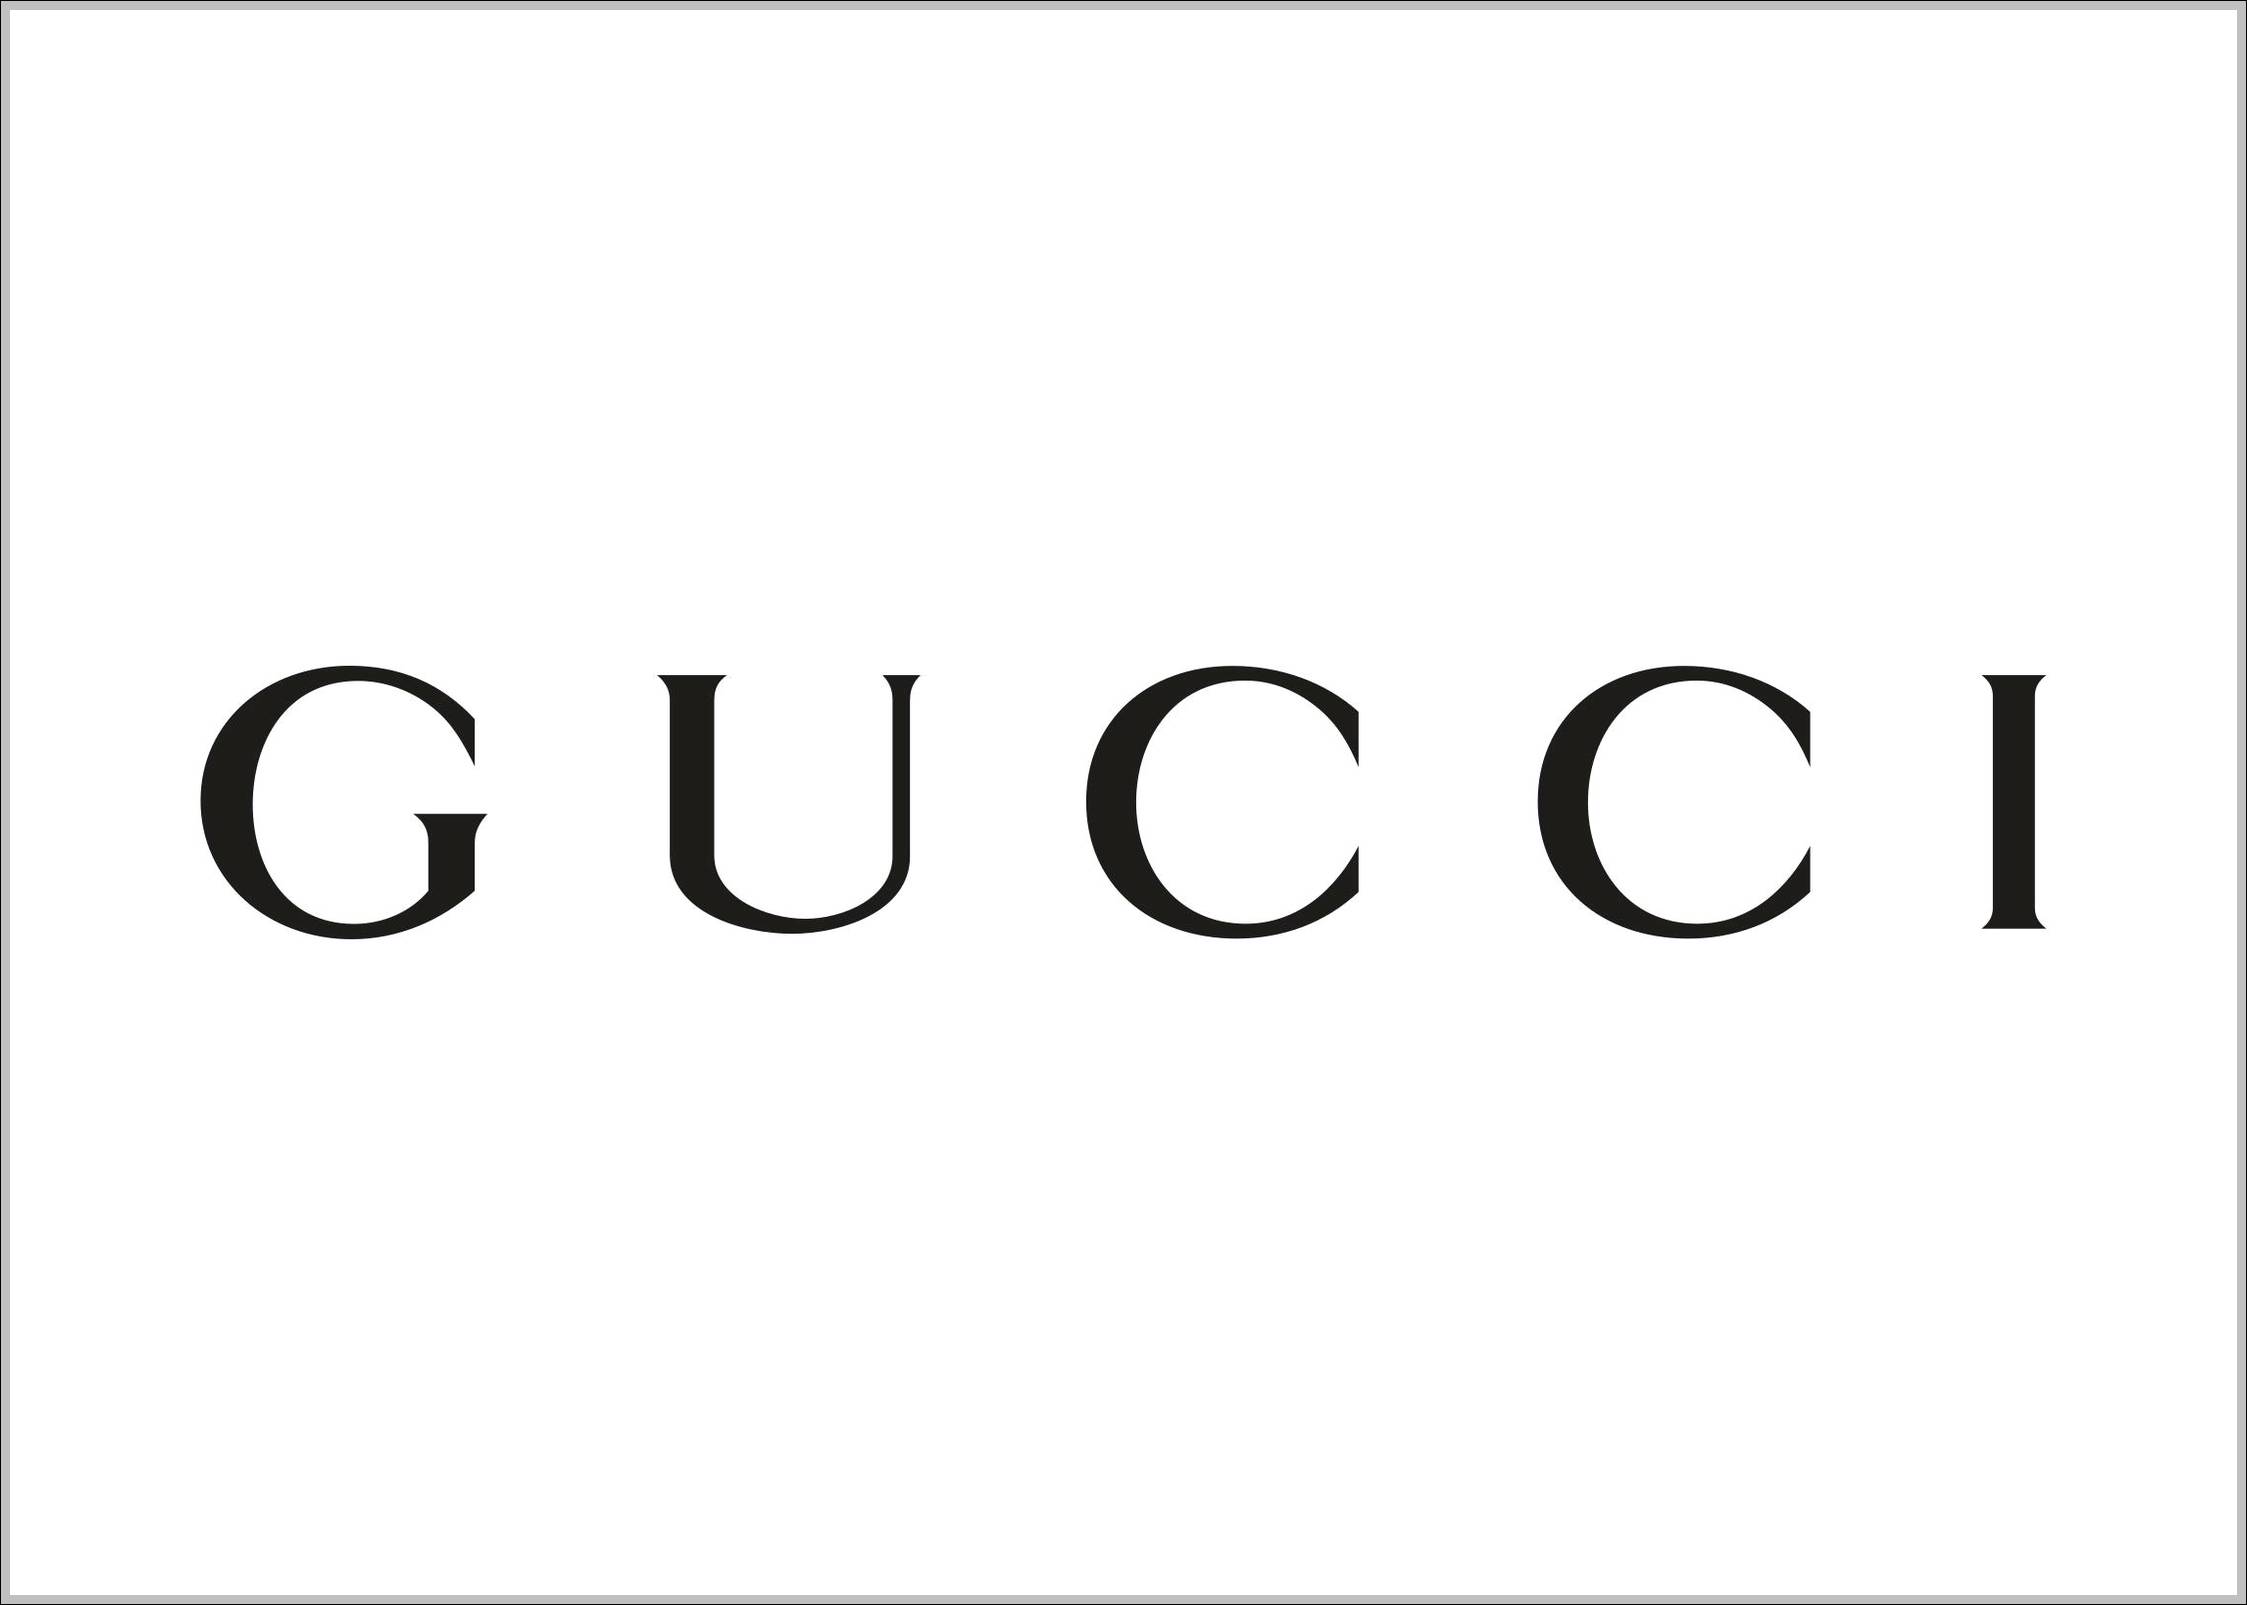 Gucci sign